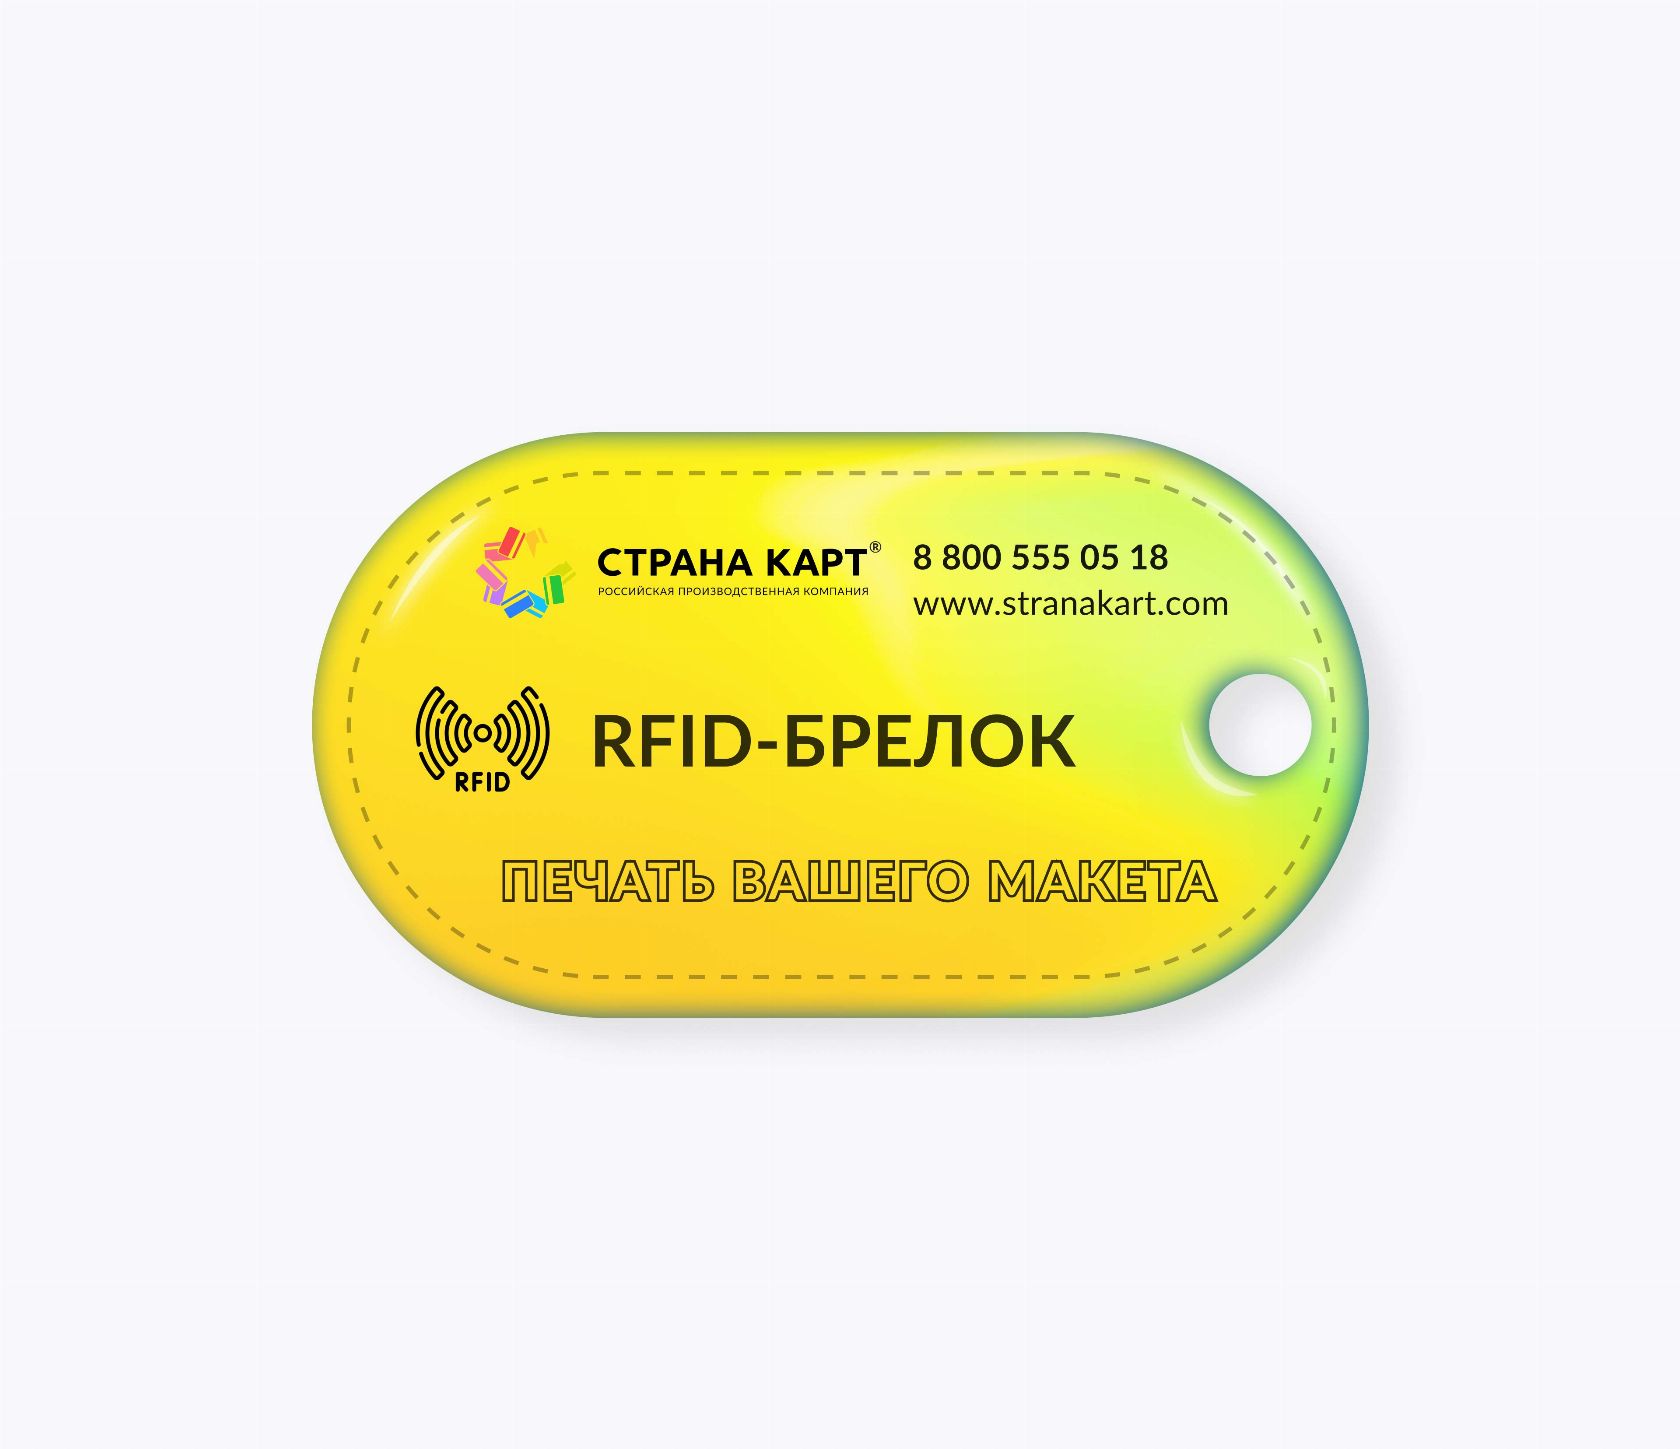 Овальные RFID-брелоки NEOKEY® с чипом NXP MIFARE Classic 1k 4 byte nUID RFID-брелоки NEOKEY® с чипом NXP MIFARE Classic 1k 4 byte nUID и вашим логотипом